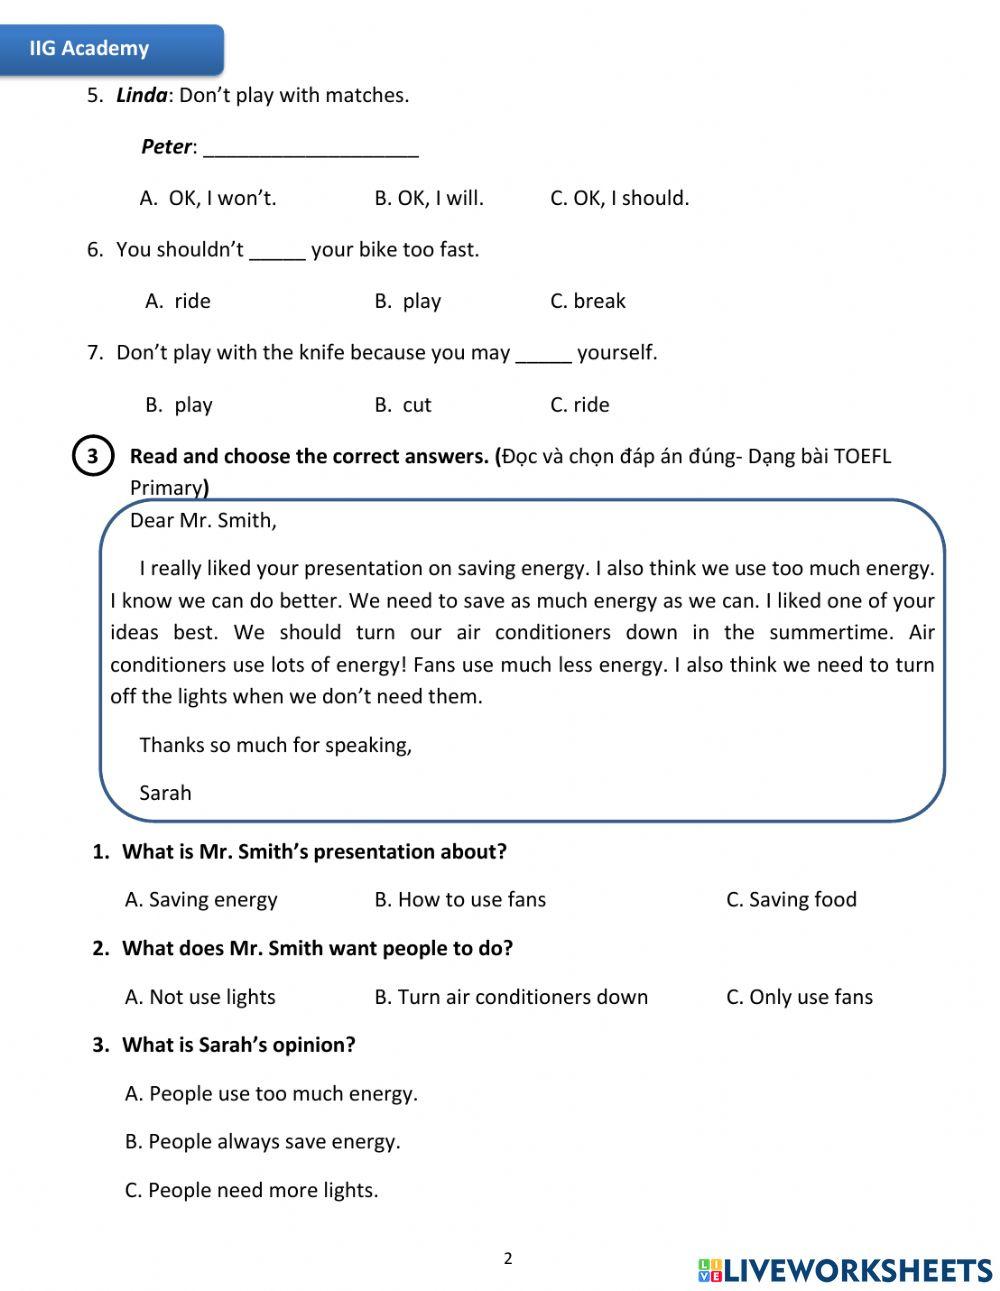 IIG-Grade 5-Worksheet 21